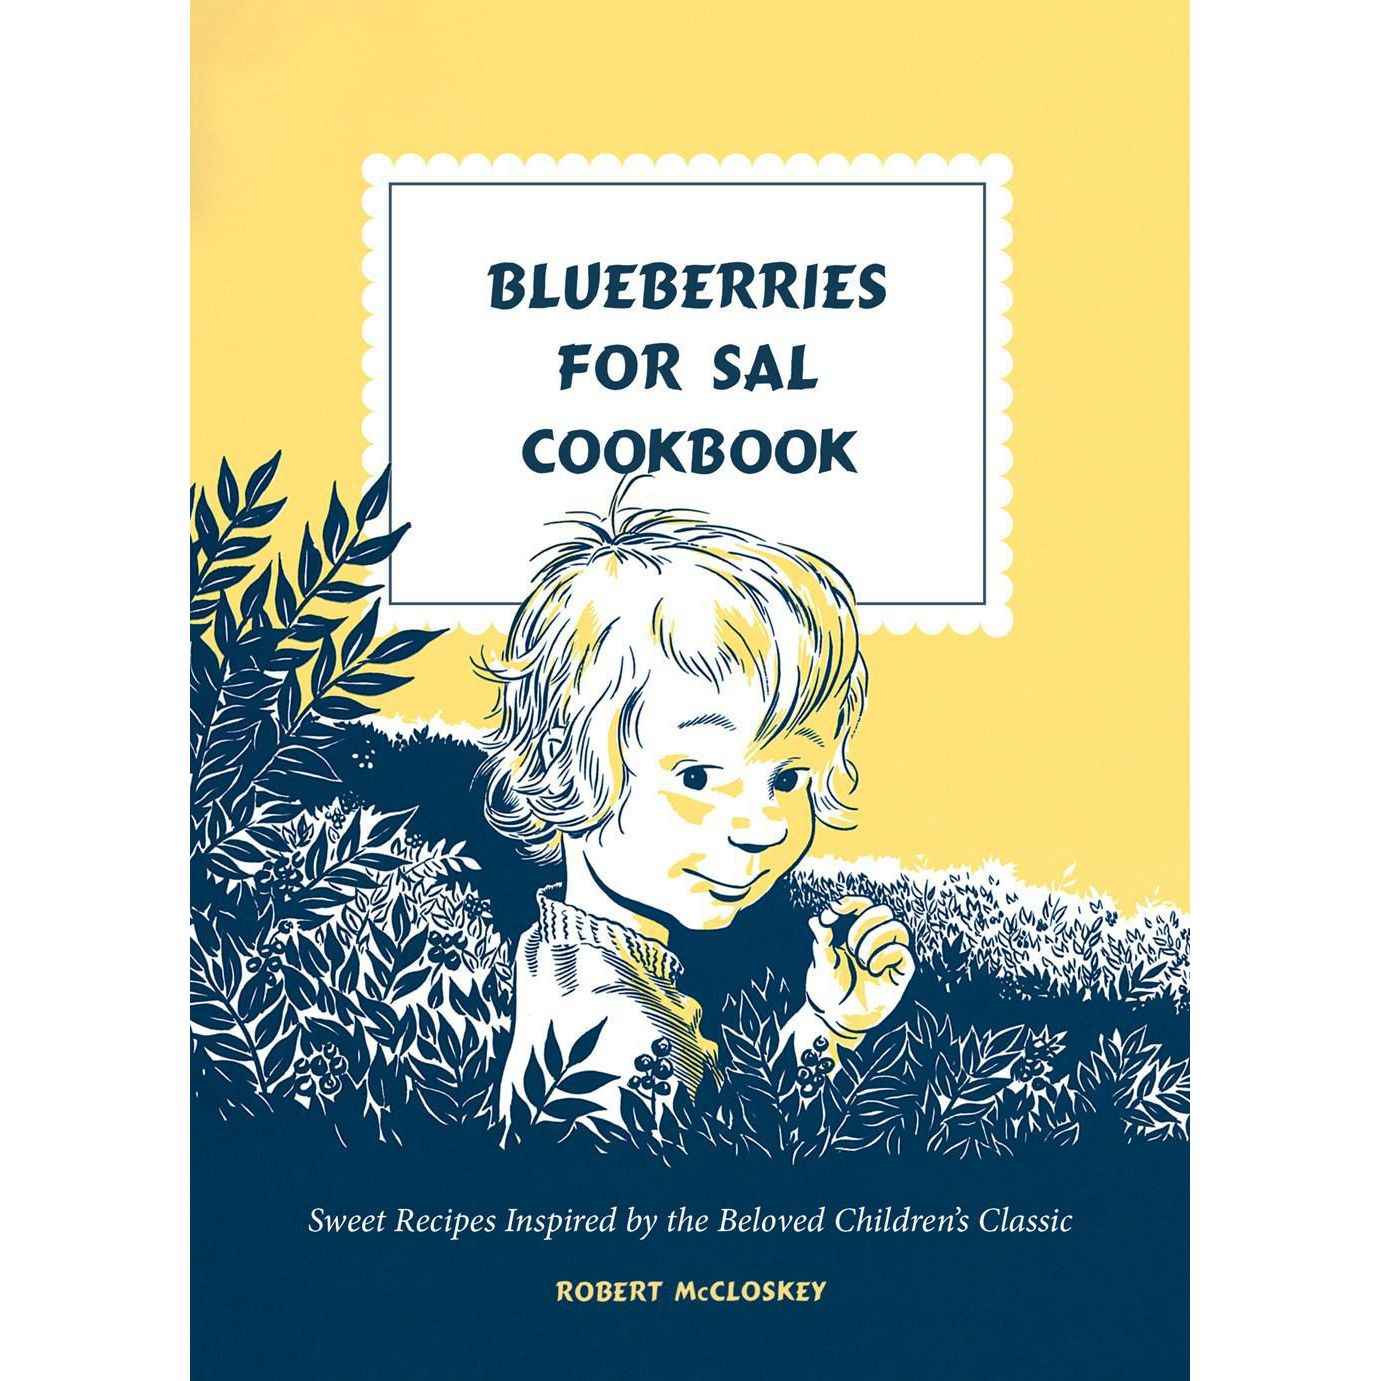 Blueberries For Sal Cookbook (Robert McCloskey)